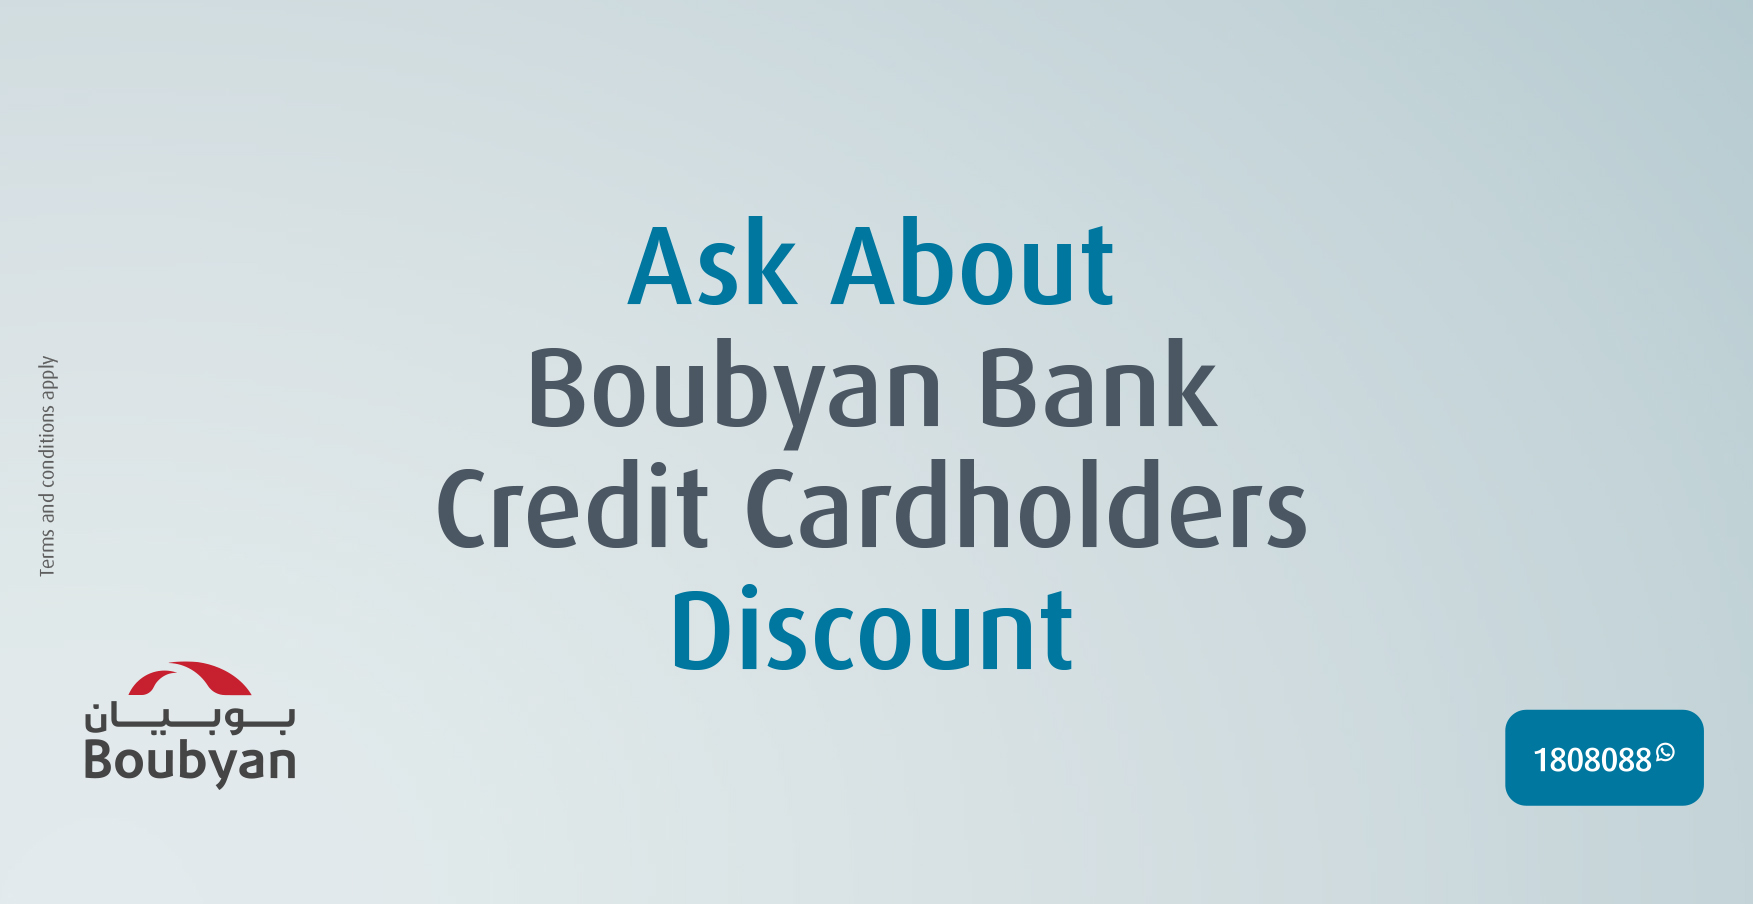 Boubyan Bank Credit Cardholders Discount